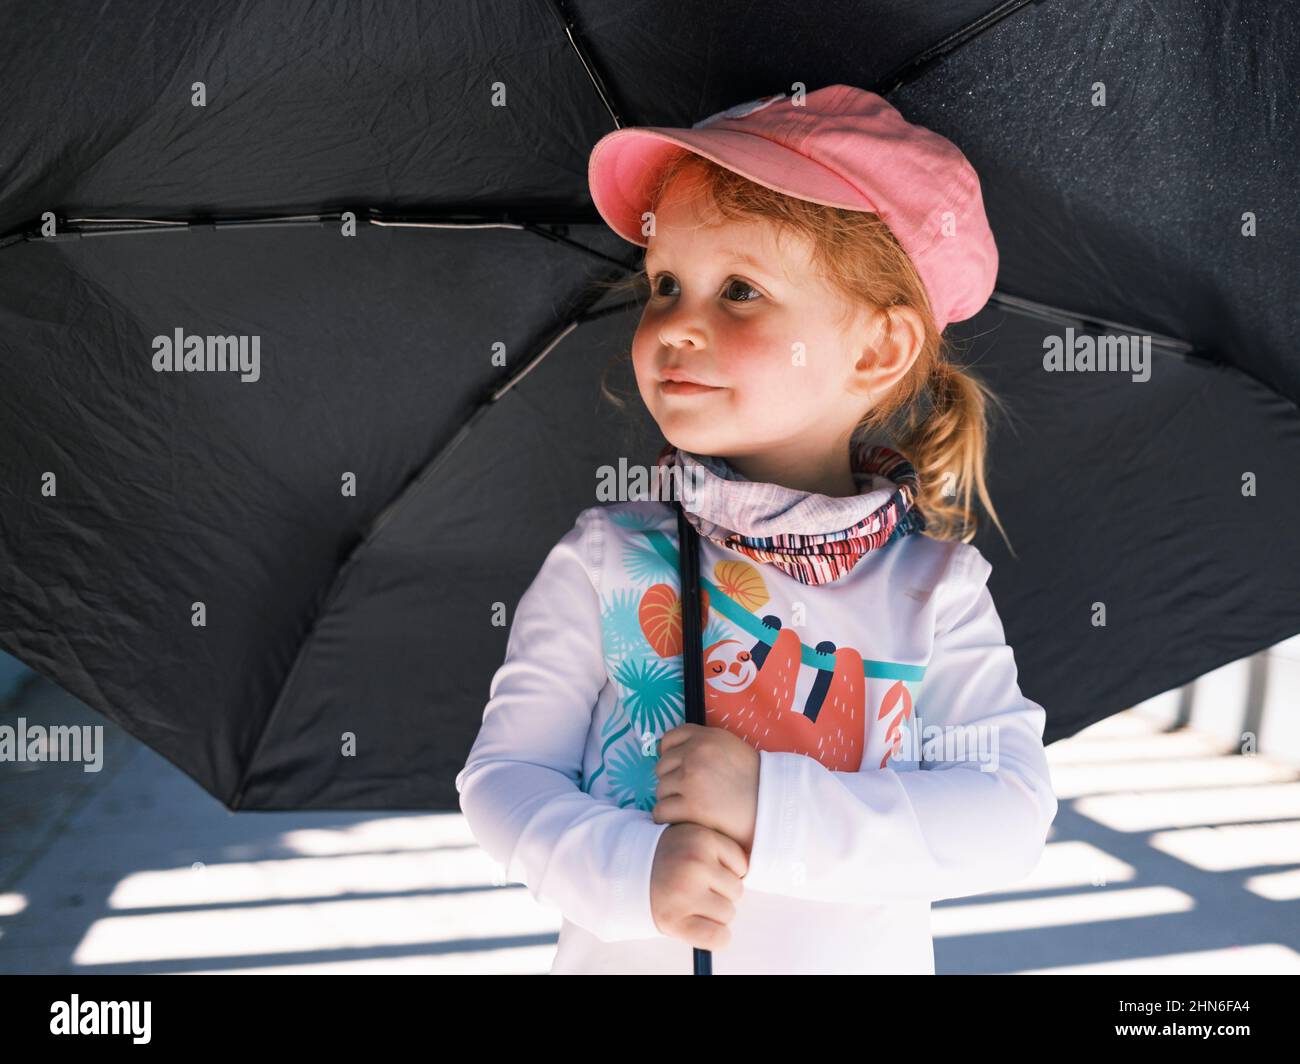 Young girl holding an umbrella for sun protection Stock Photo